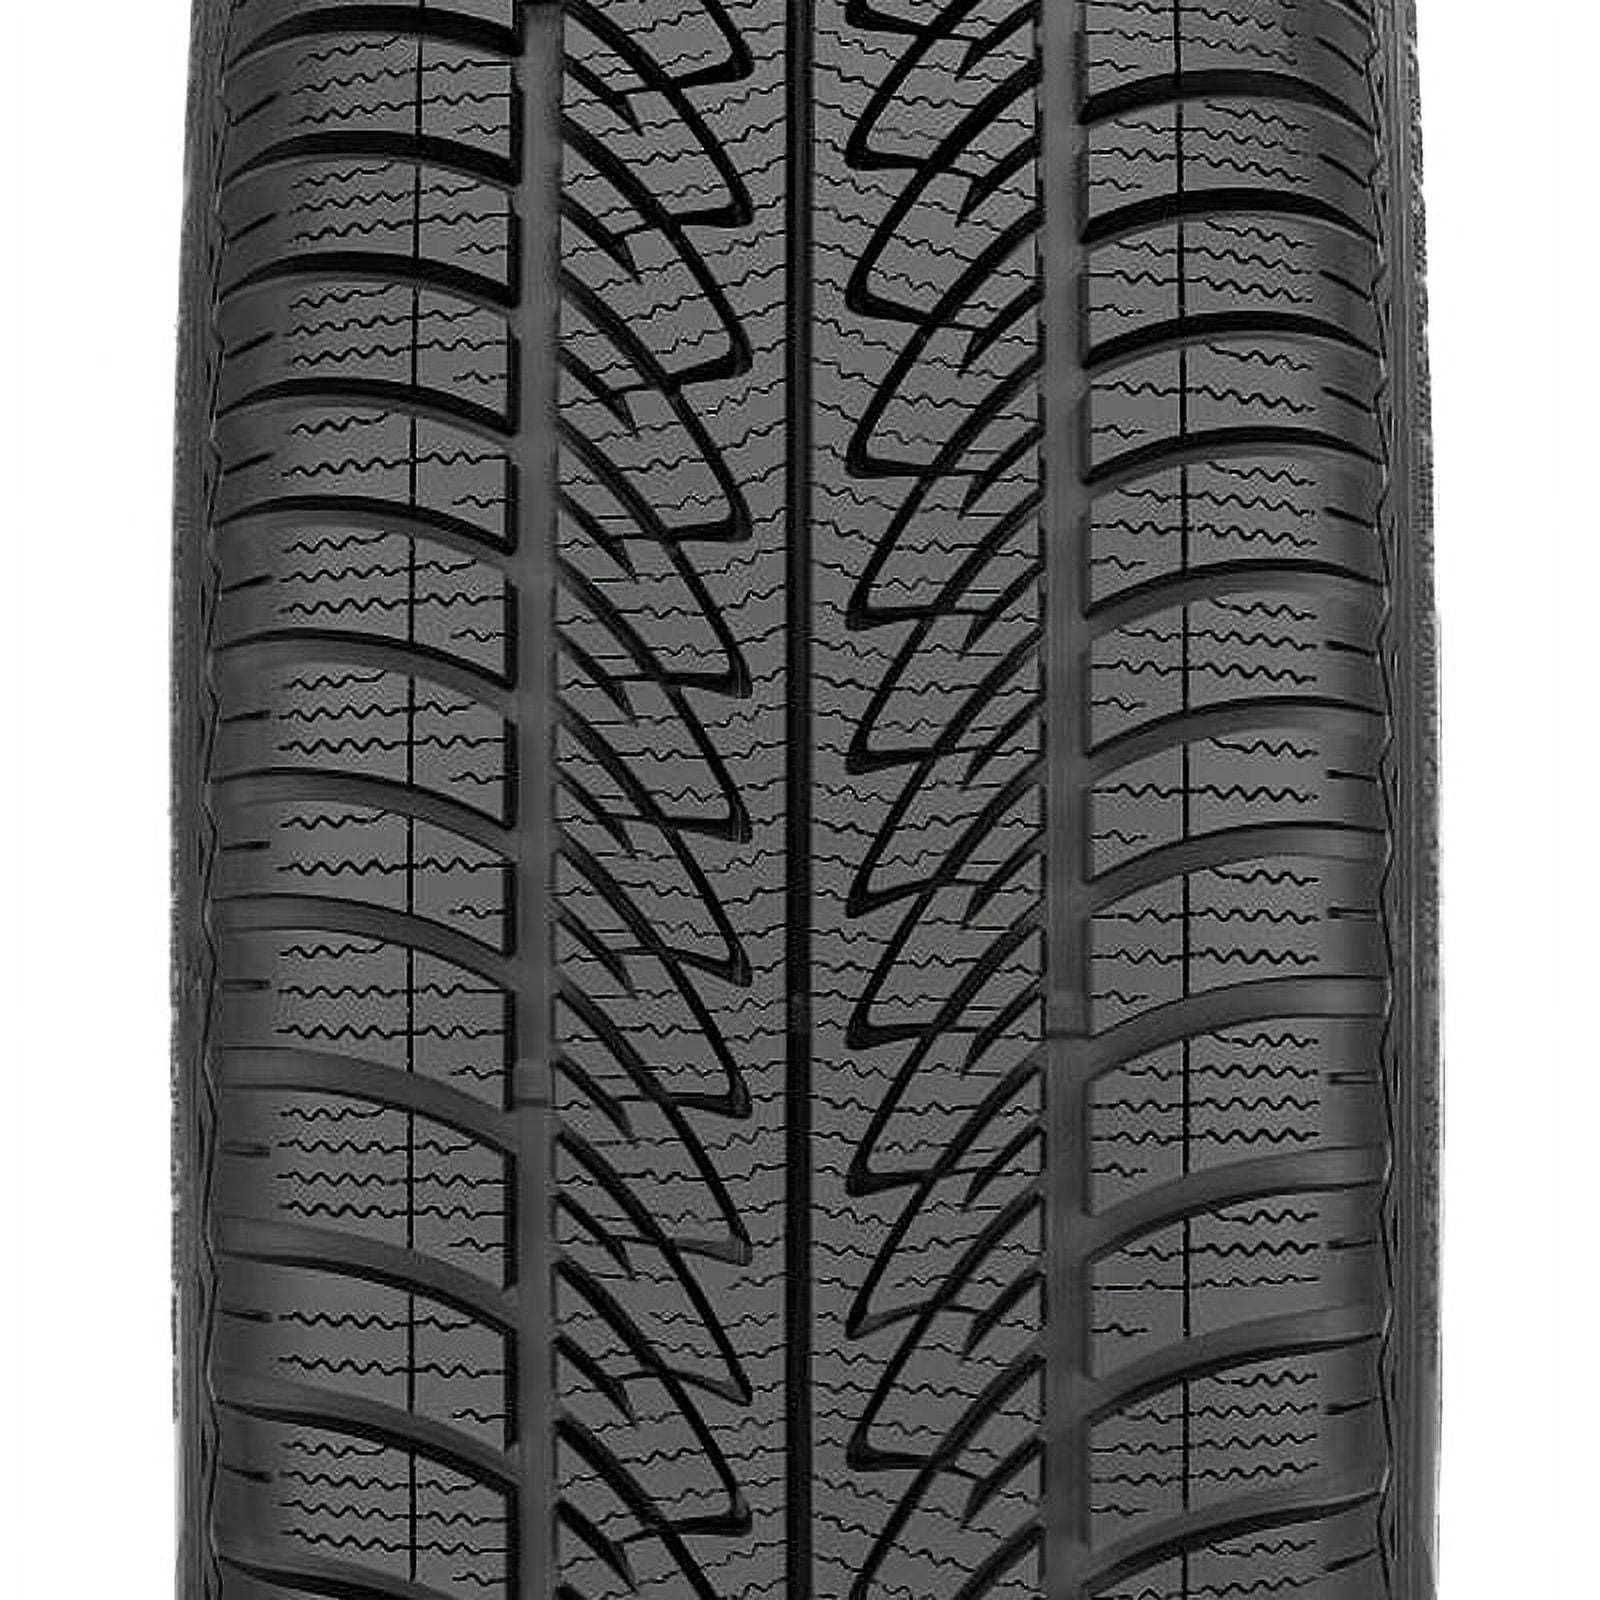 Ultra 255/60R18 8 Tire 108H (Studless) Performance Snow Winter Goodyear Grip